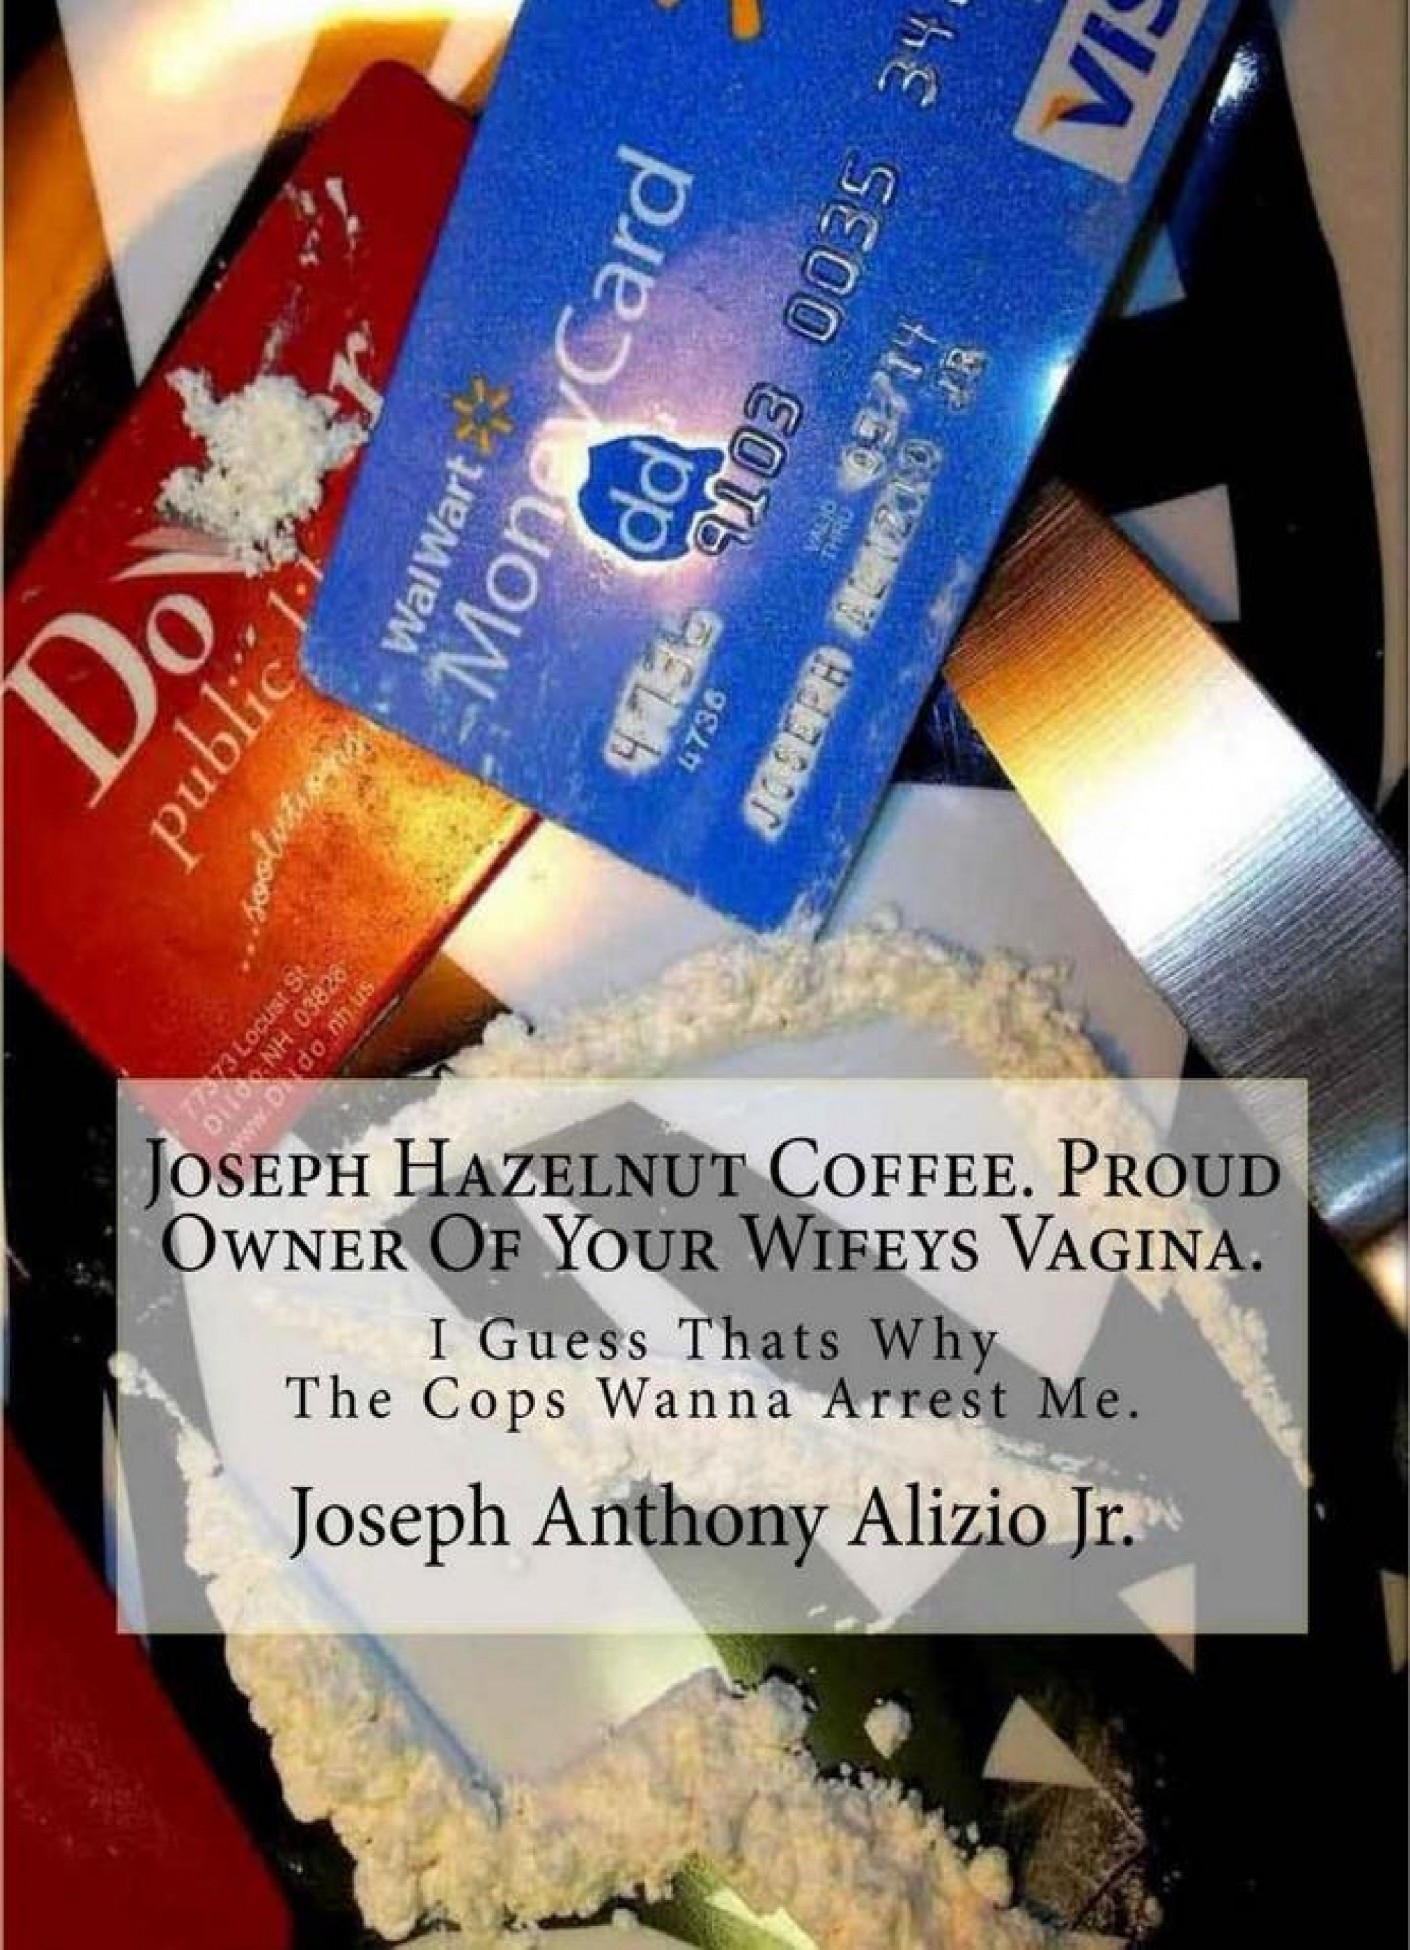 Joseph Hazelnut Coffee photo pic